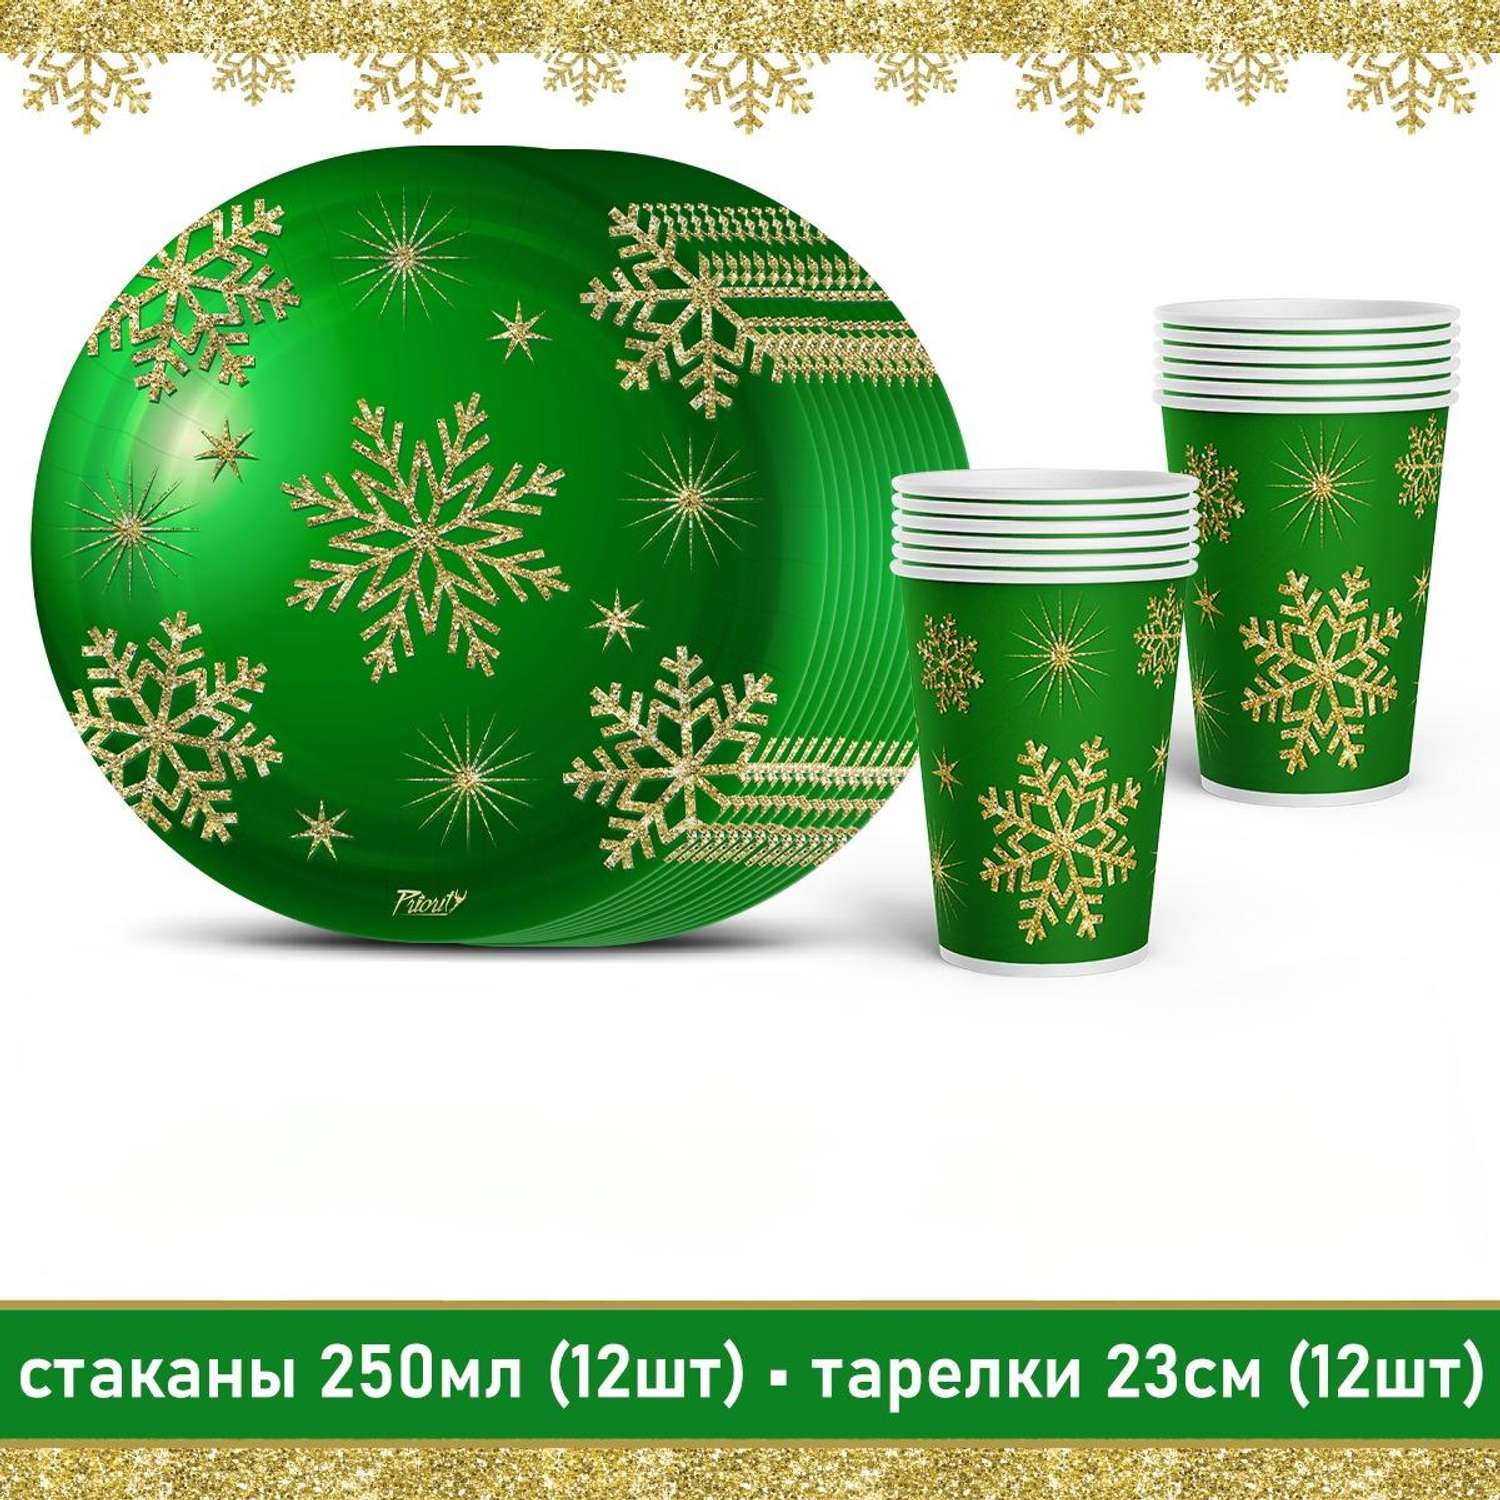 Одноразовая посуда PrioritY Новогодний набор Снежинки Зеленый - фото 1